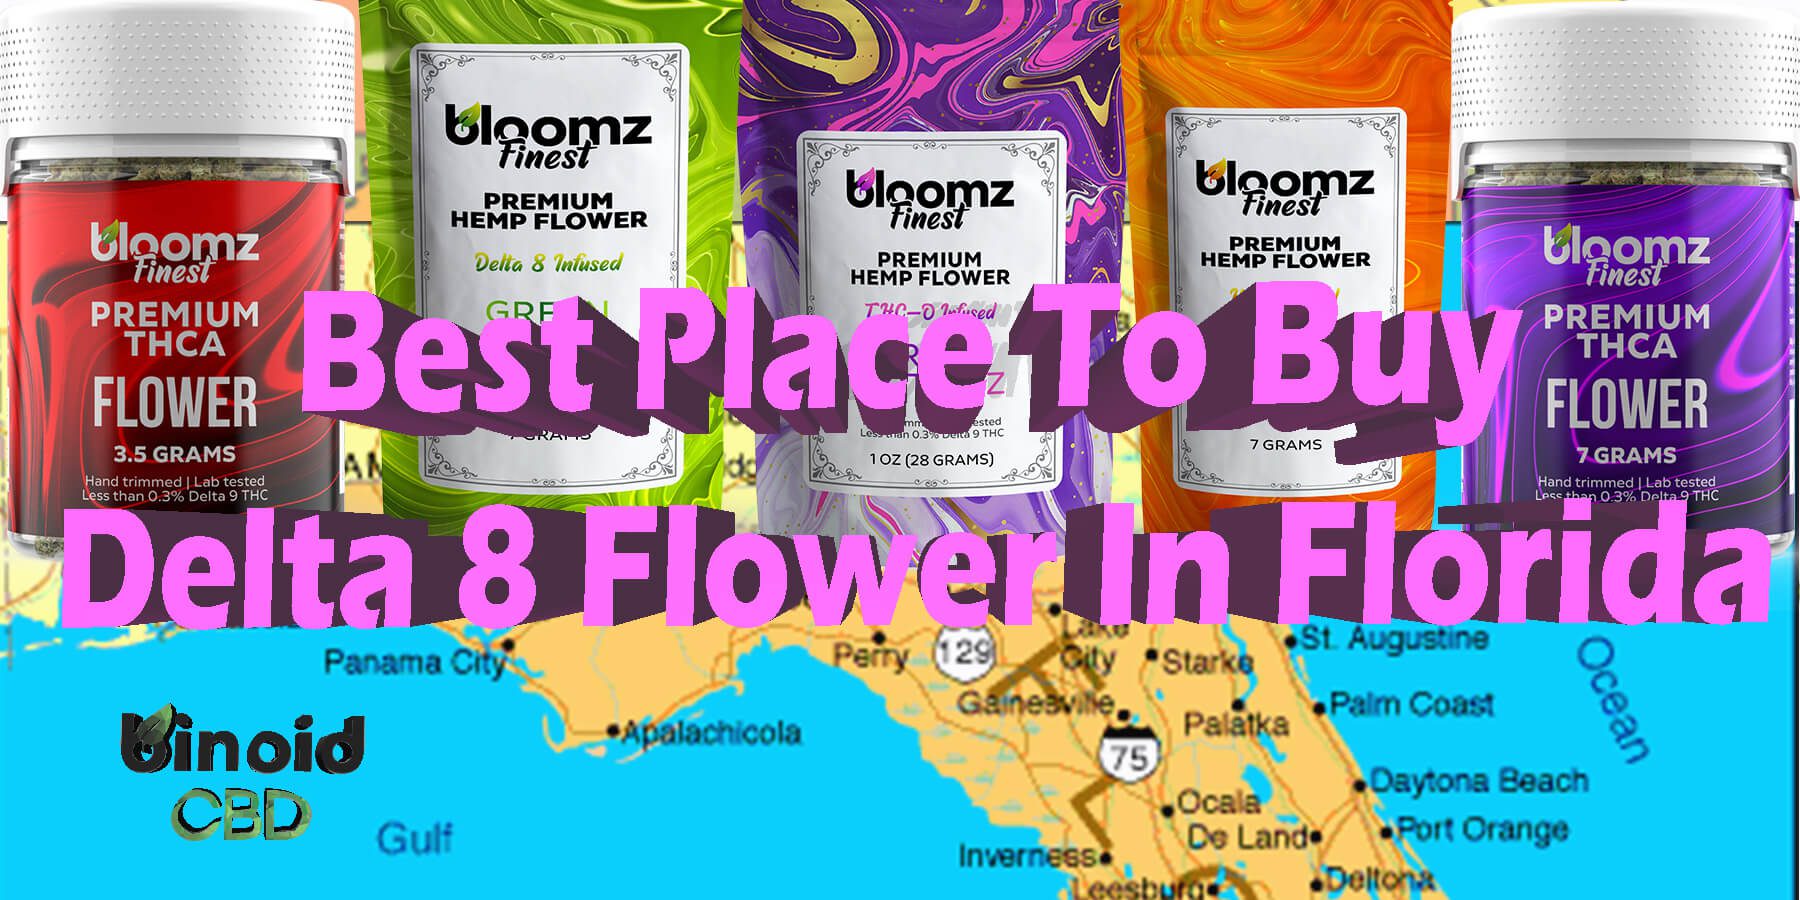 Buy Delta 8 THC Hemp Flower Florida Get Near Me Best Price Place To Get Strongest Brand Reddit